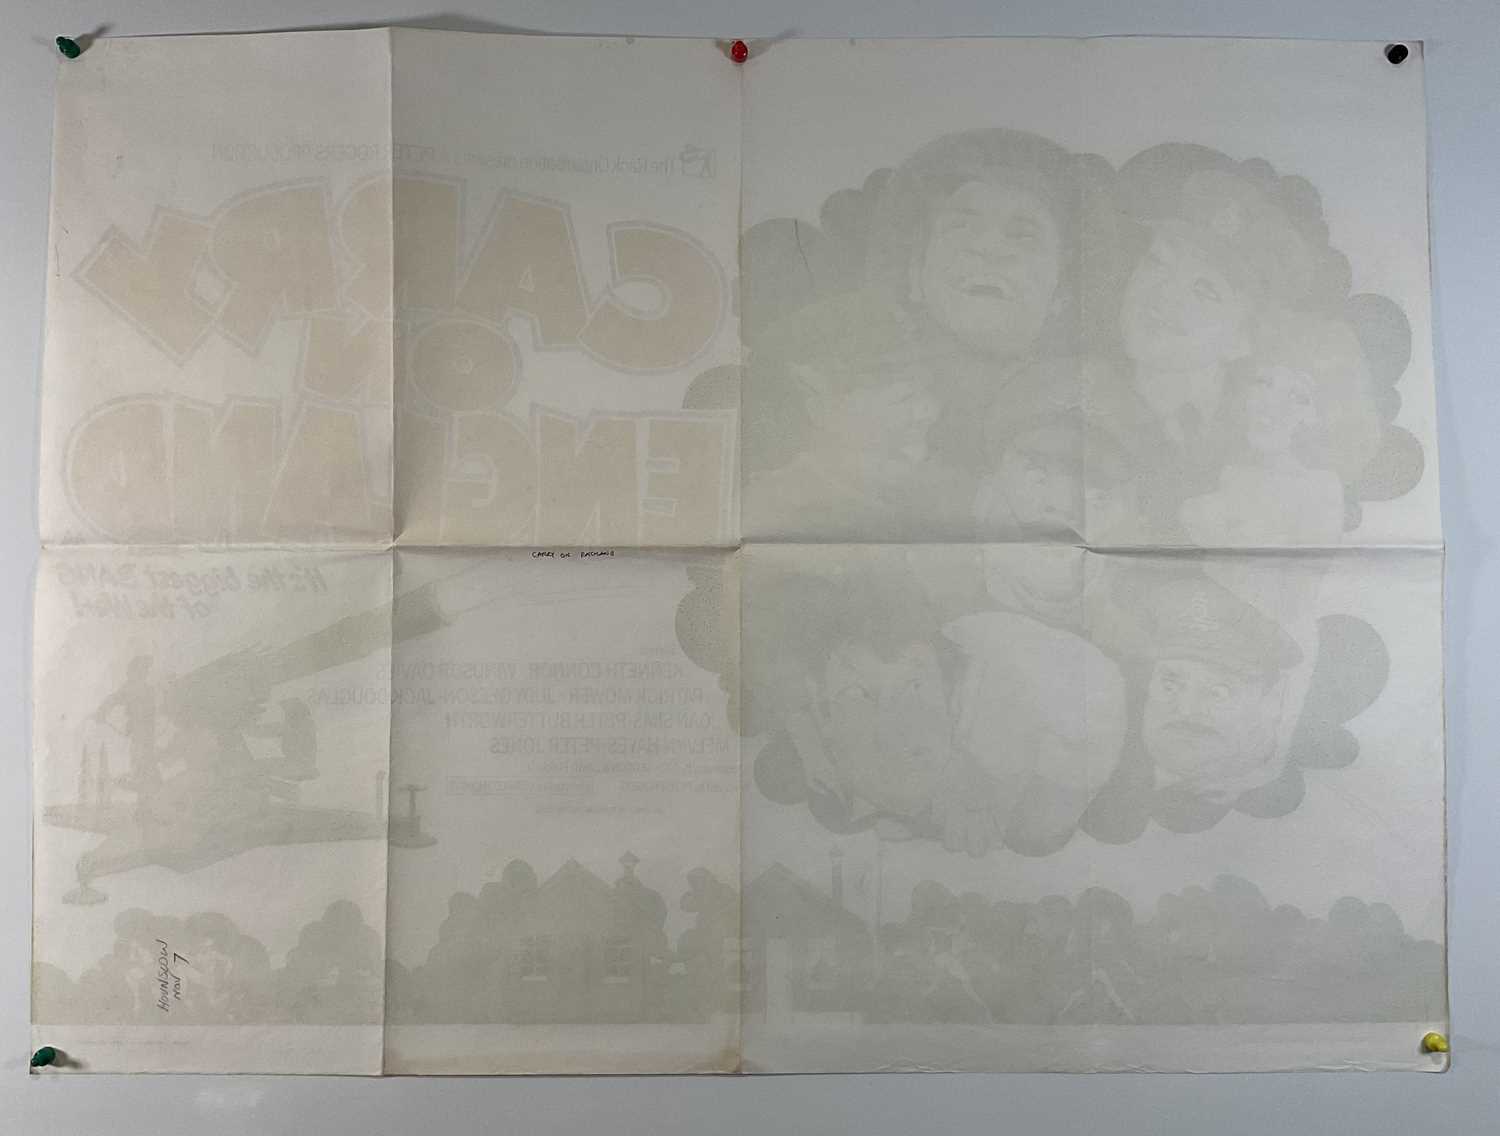 CARRY ON ENGLAND (1976) UK Quad film poster, artwork by Arnaldo Putzu, folded. - Image 6 of 6